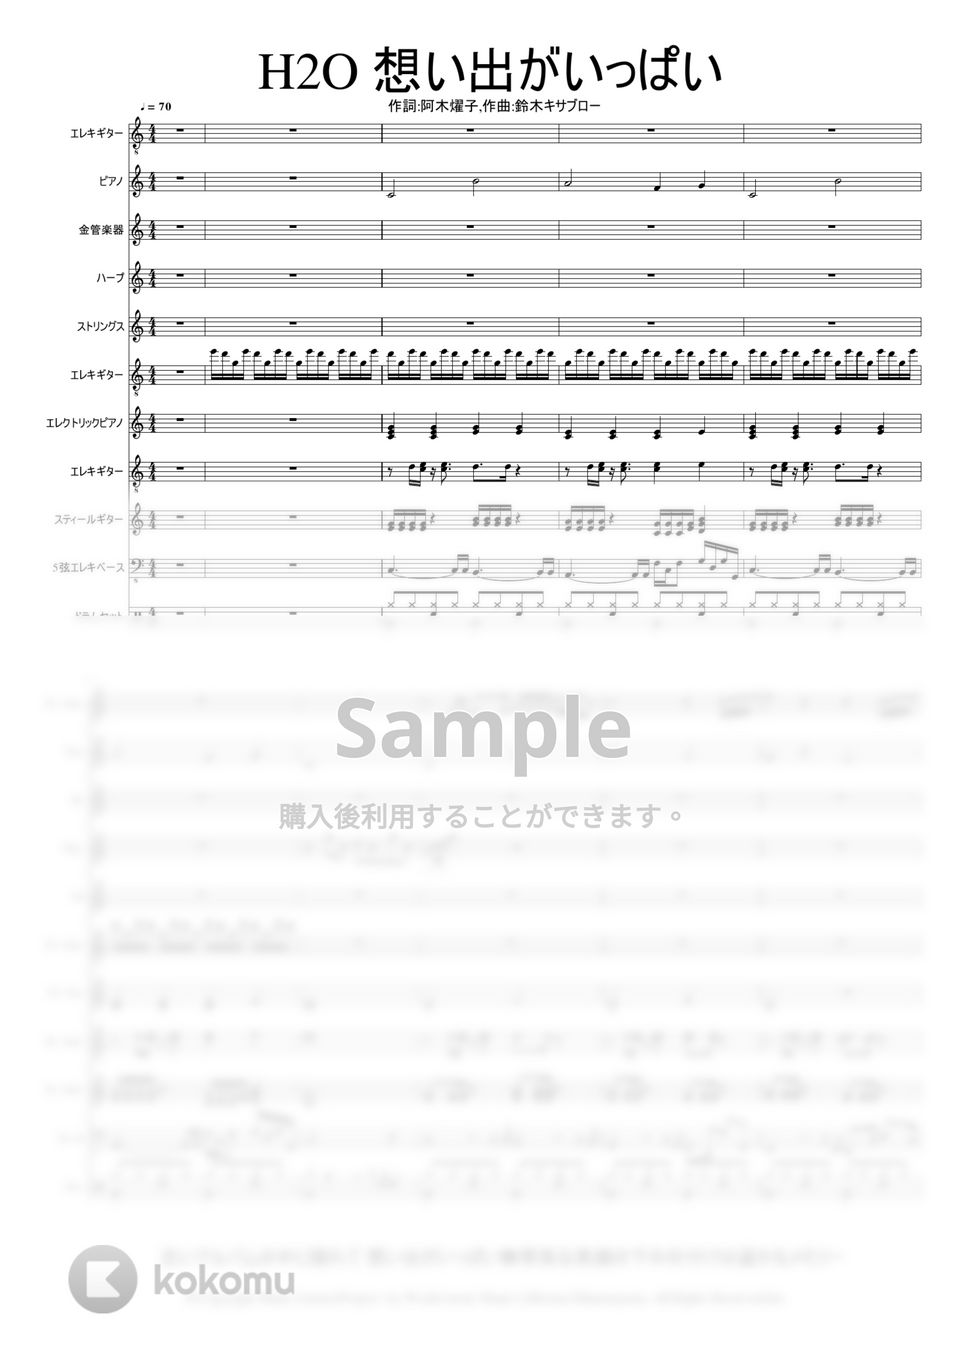 H2O 詞:阿木燿子,作曲:鈴木キサブロー - 想い出がいっぱい (Canon「PIXUS BUBBLE JET PRINTER」) by Mitsuru Minamiyama